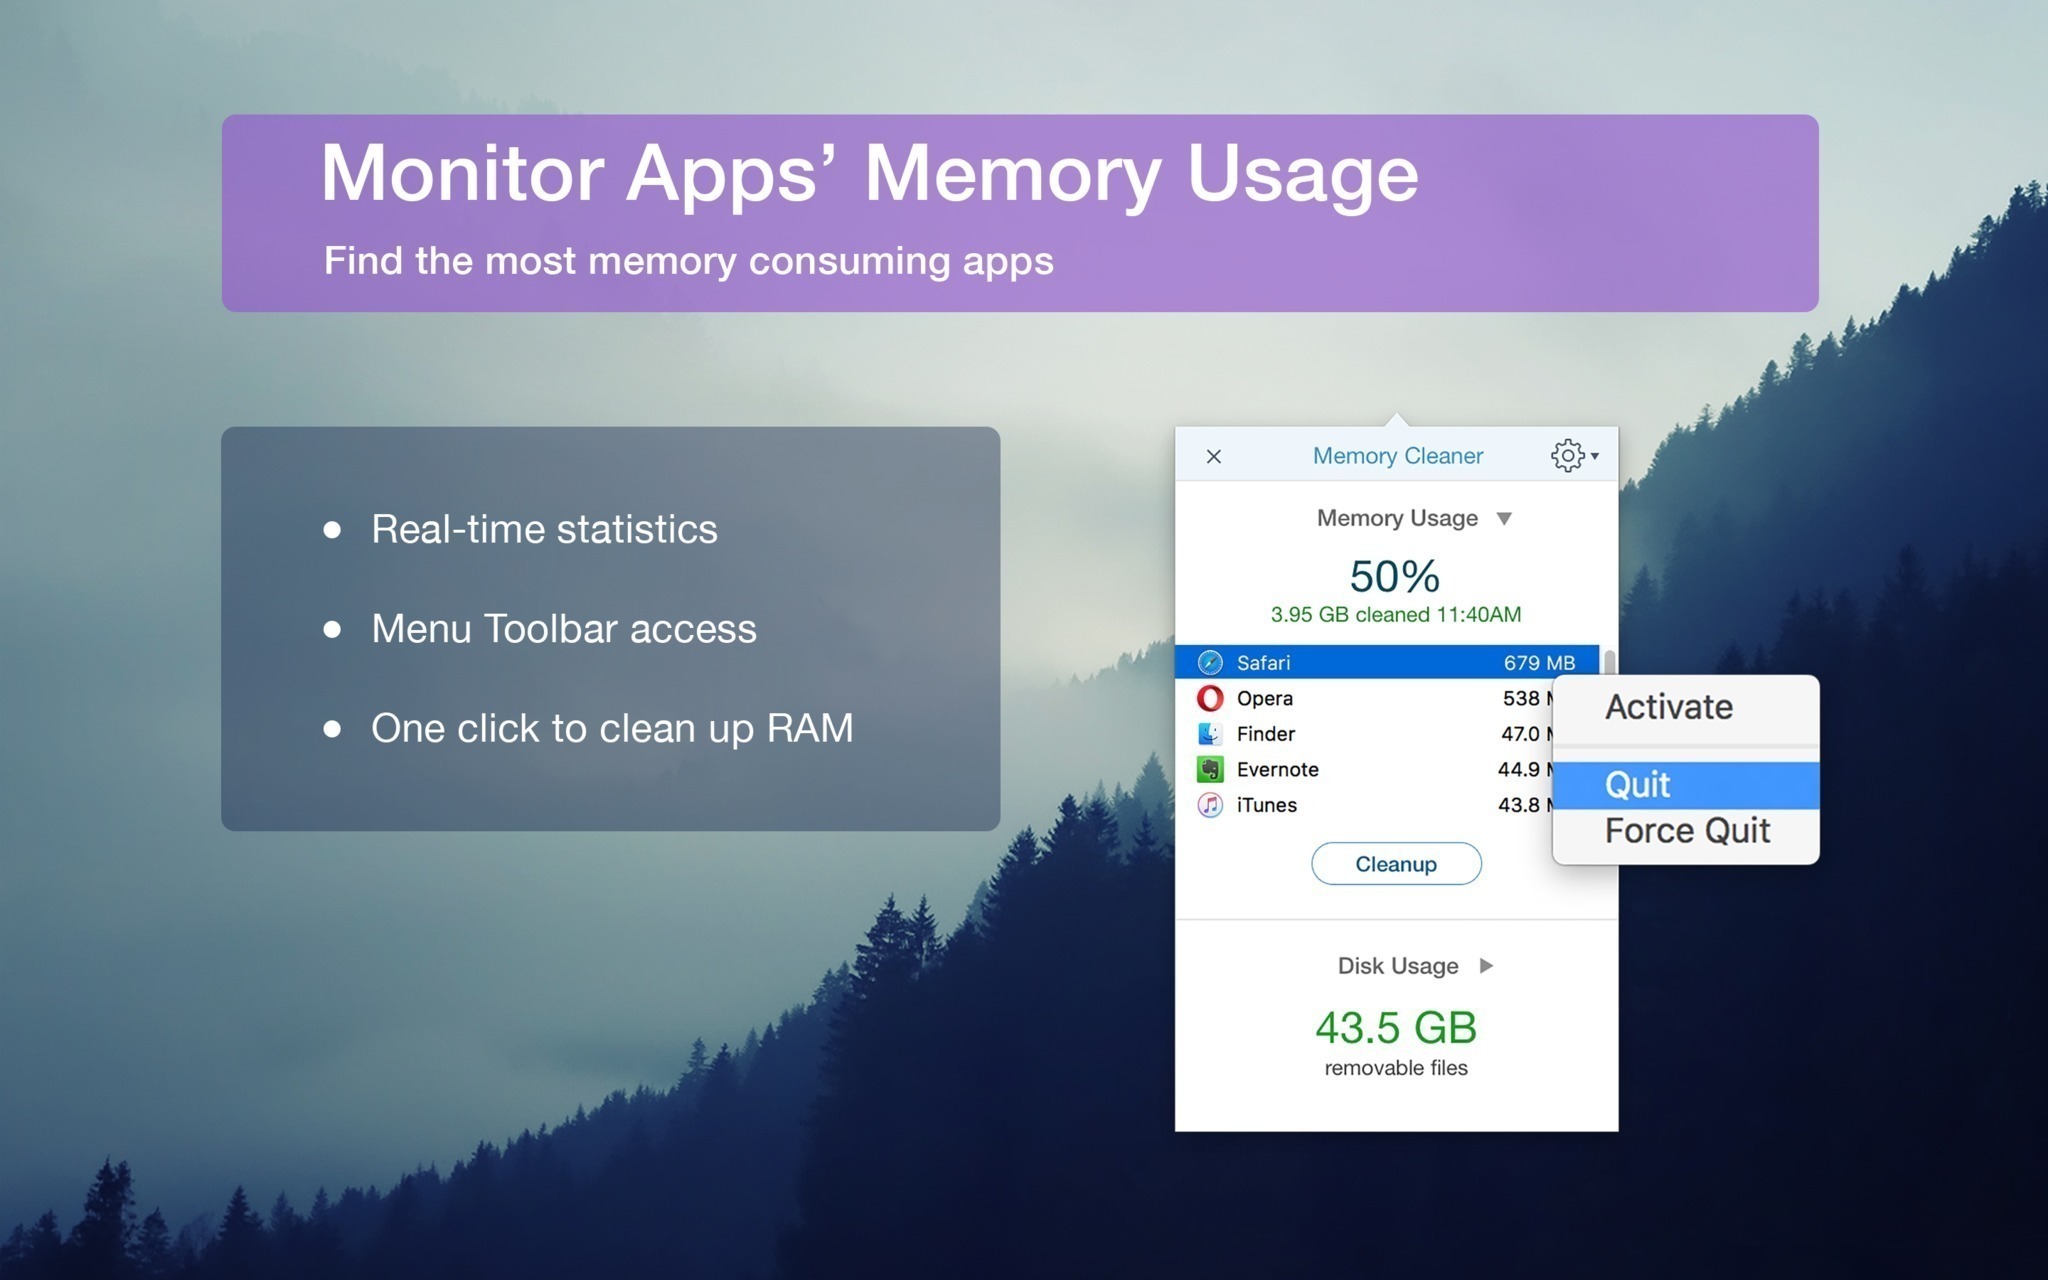 auto memory cleaner mac